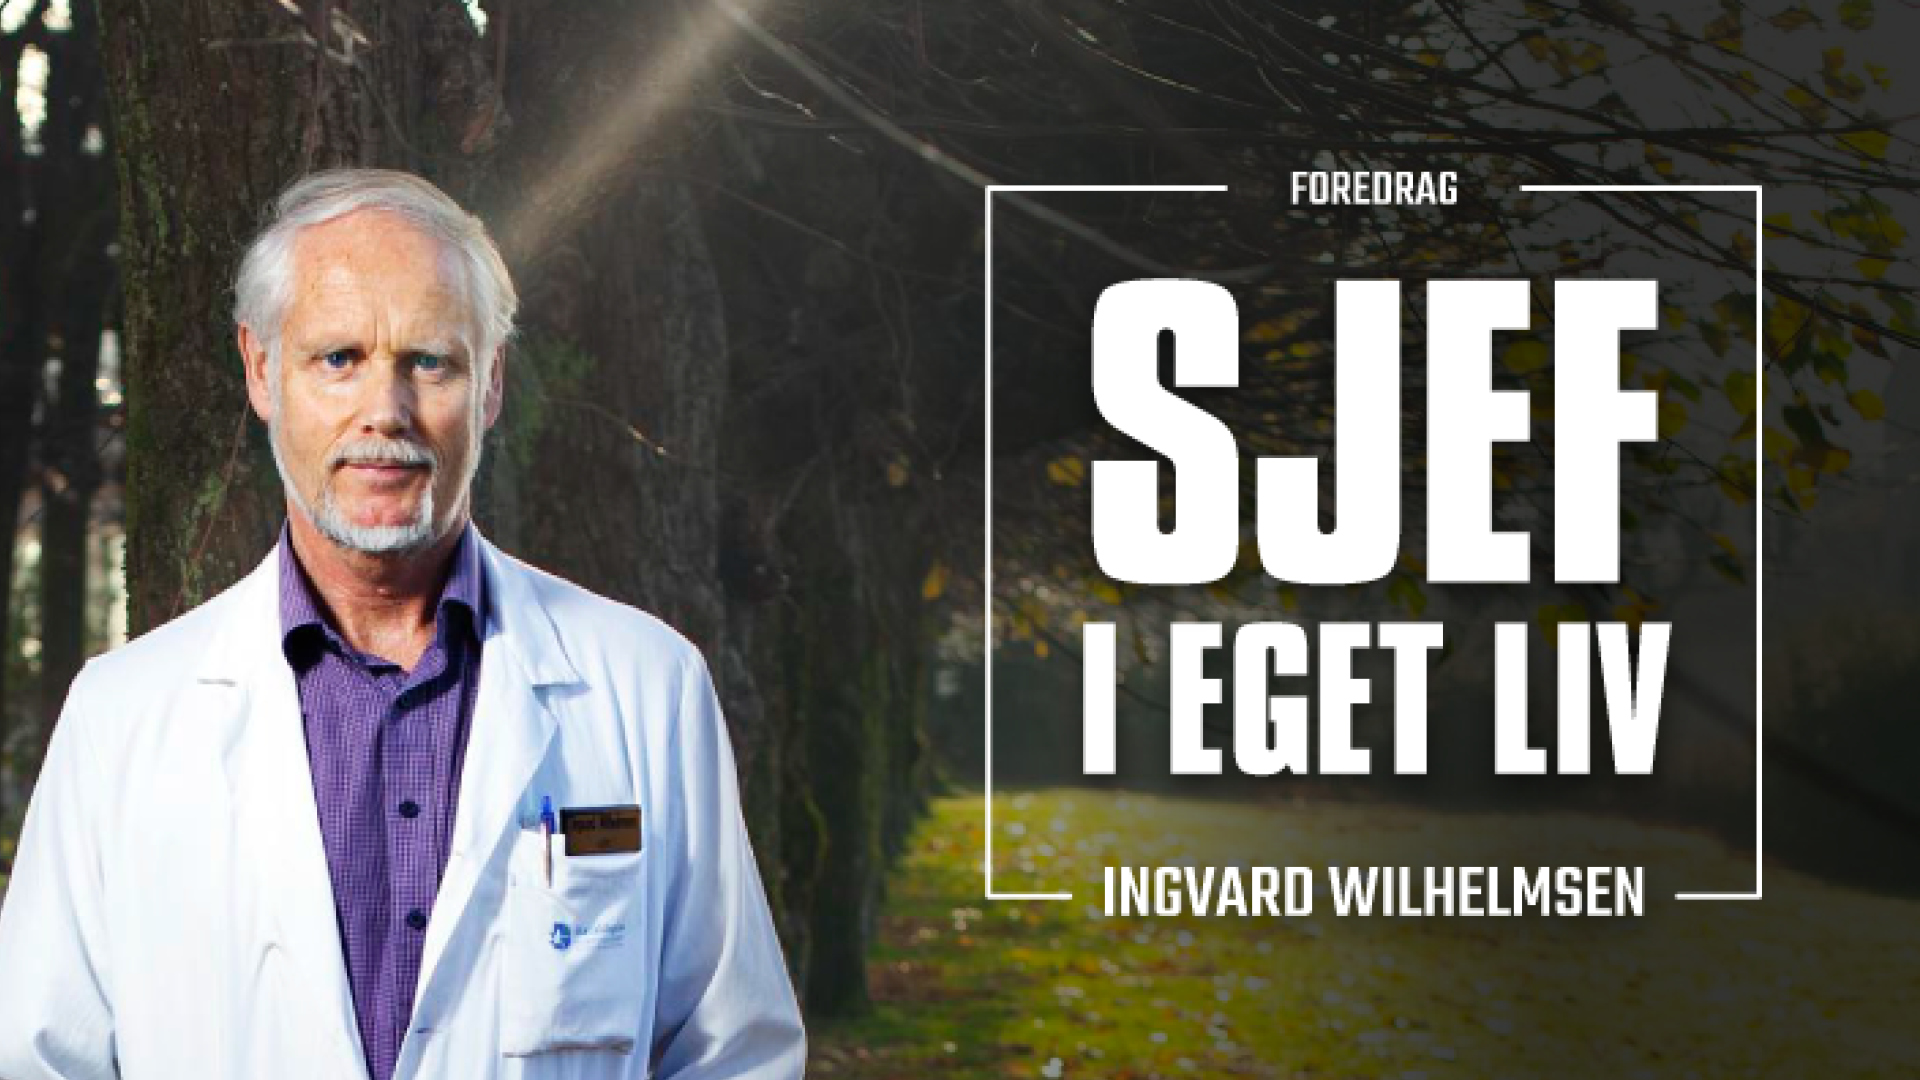 Ingvard Wilhelmsen: Sjef i eget liv